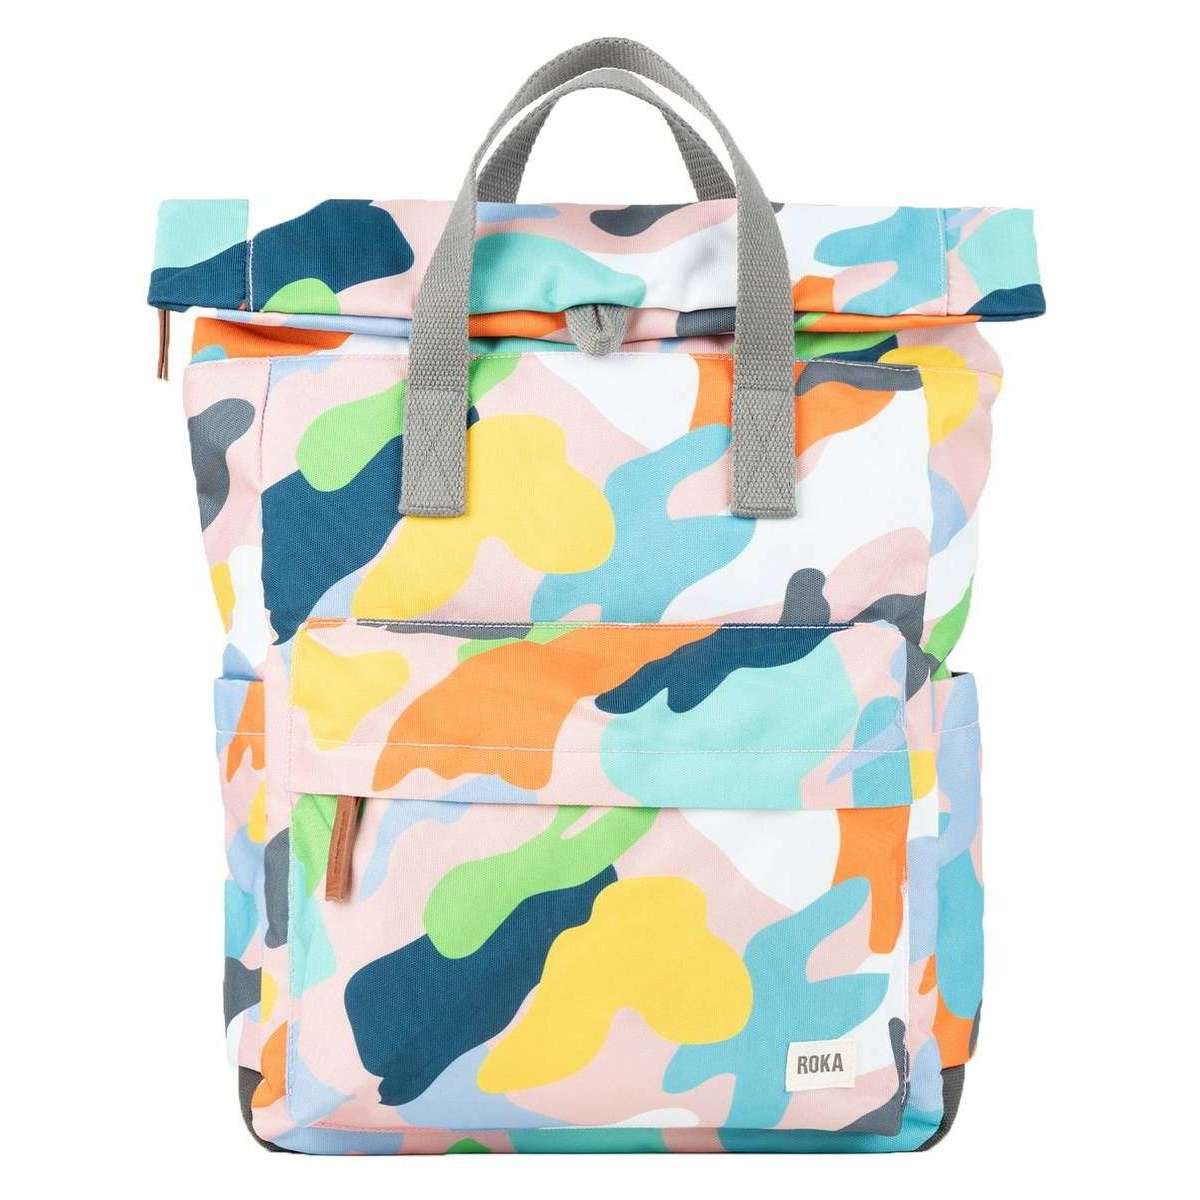 Roka Canfield B Medium Mellow Camo Sustainable Canvas Backpack - White/Blue/Orange